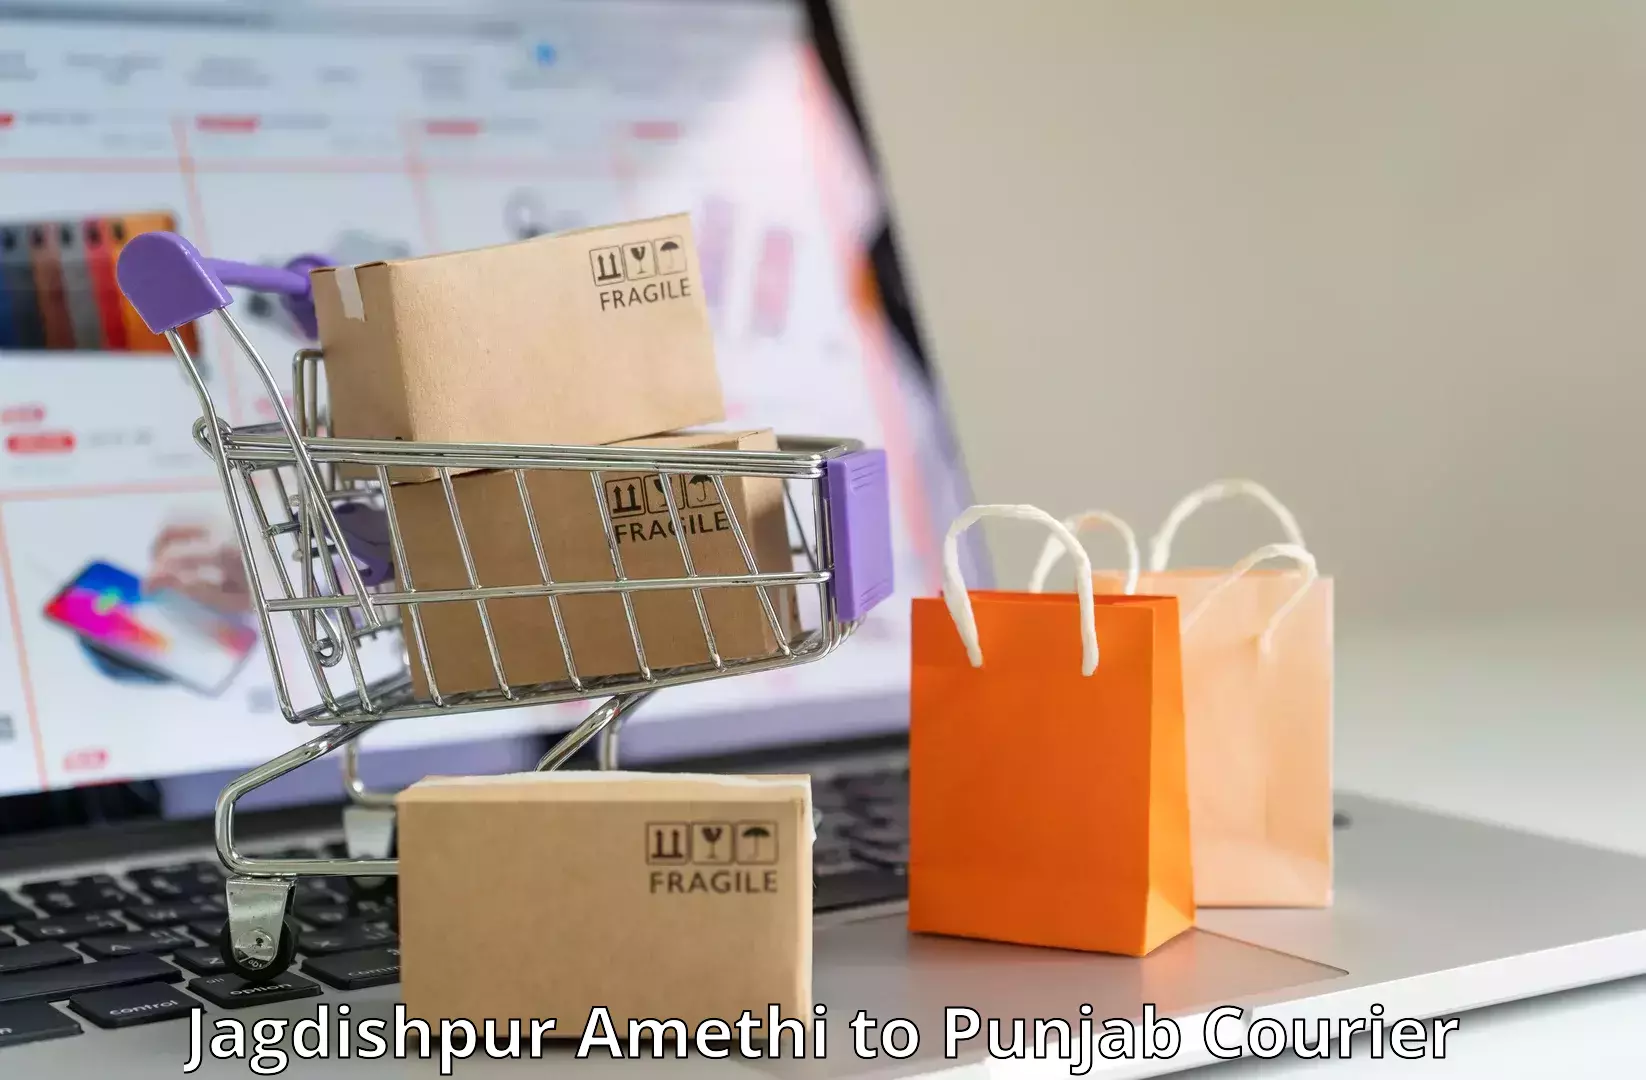 Multi-service courier options Jagdishpur Amethi to Mansa